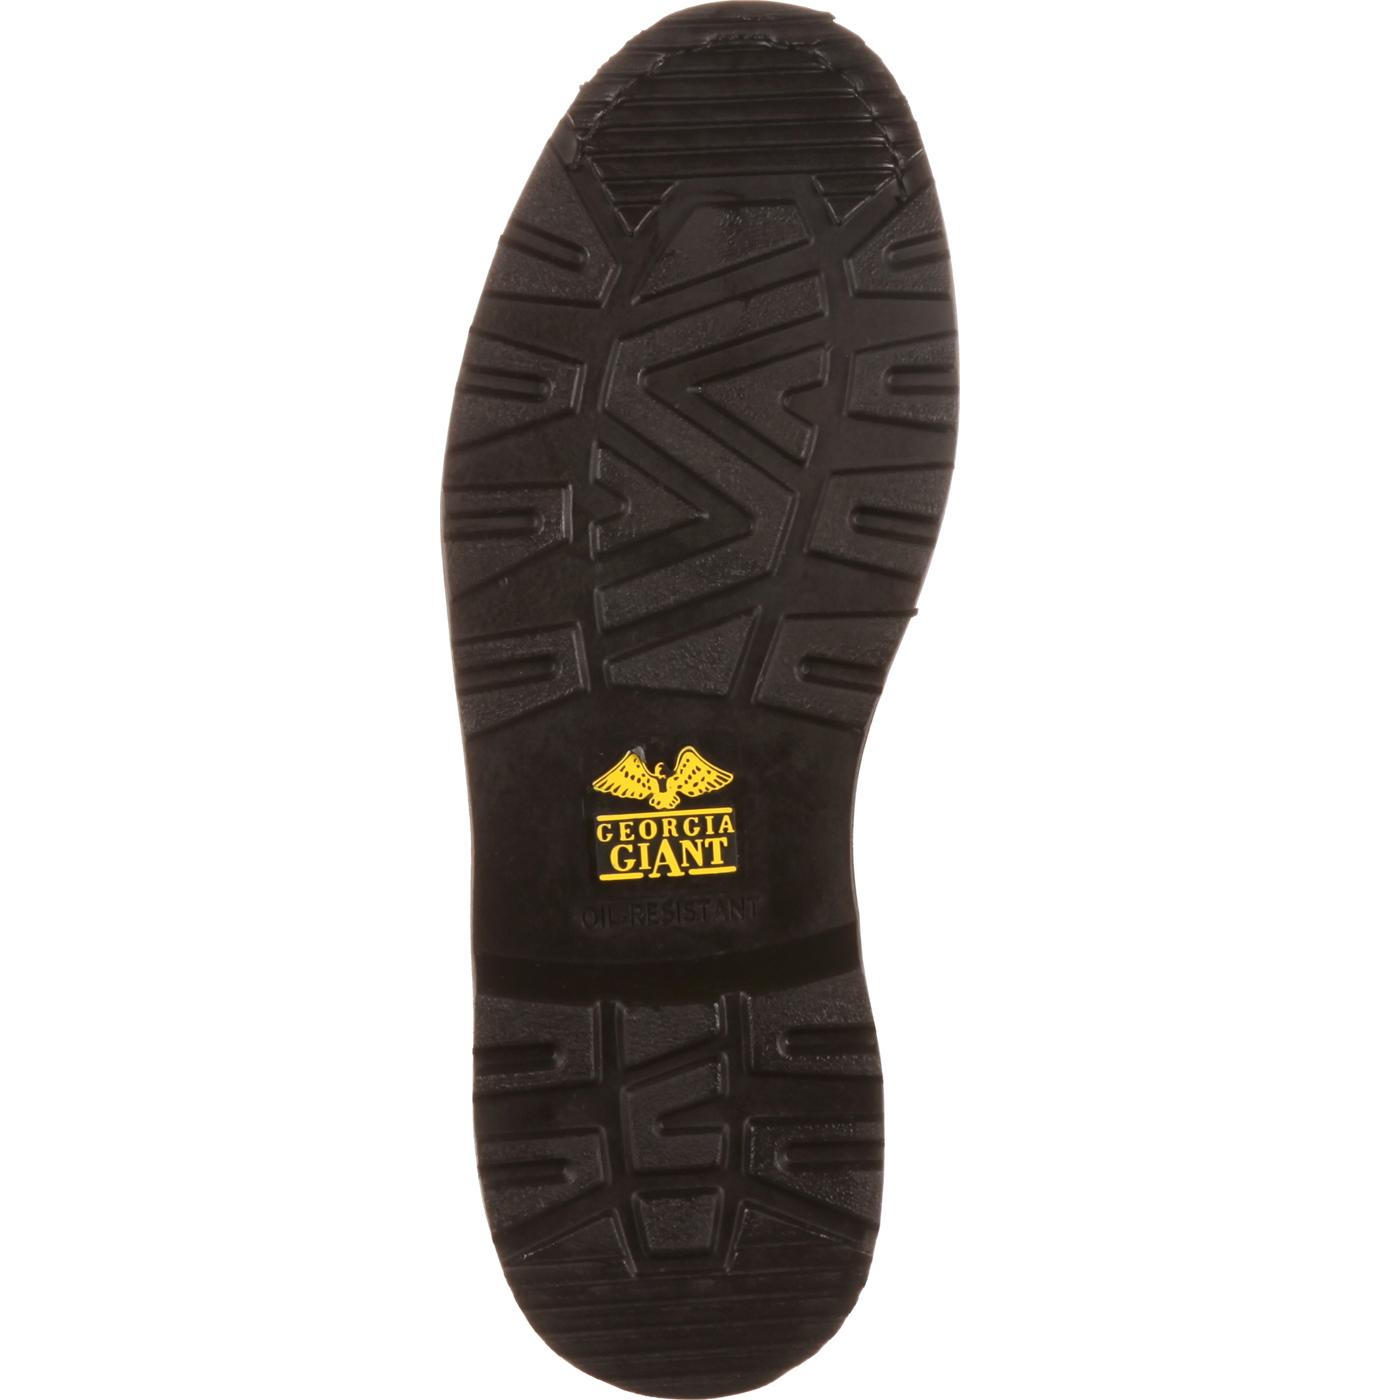 Georgia Boot Waterproof Romeo Slip-On Shoes, style #GR500